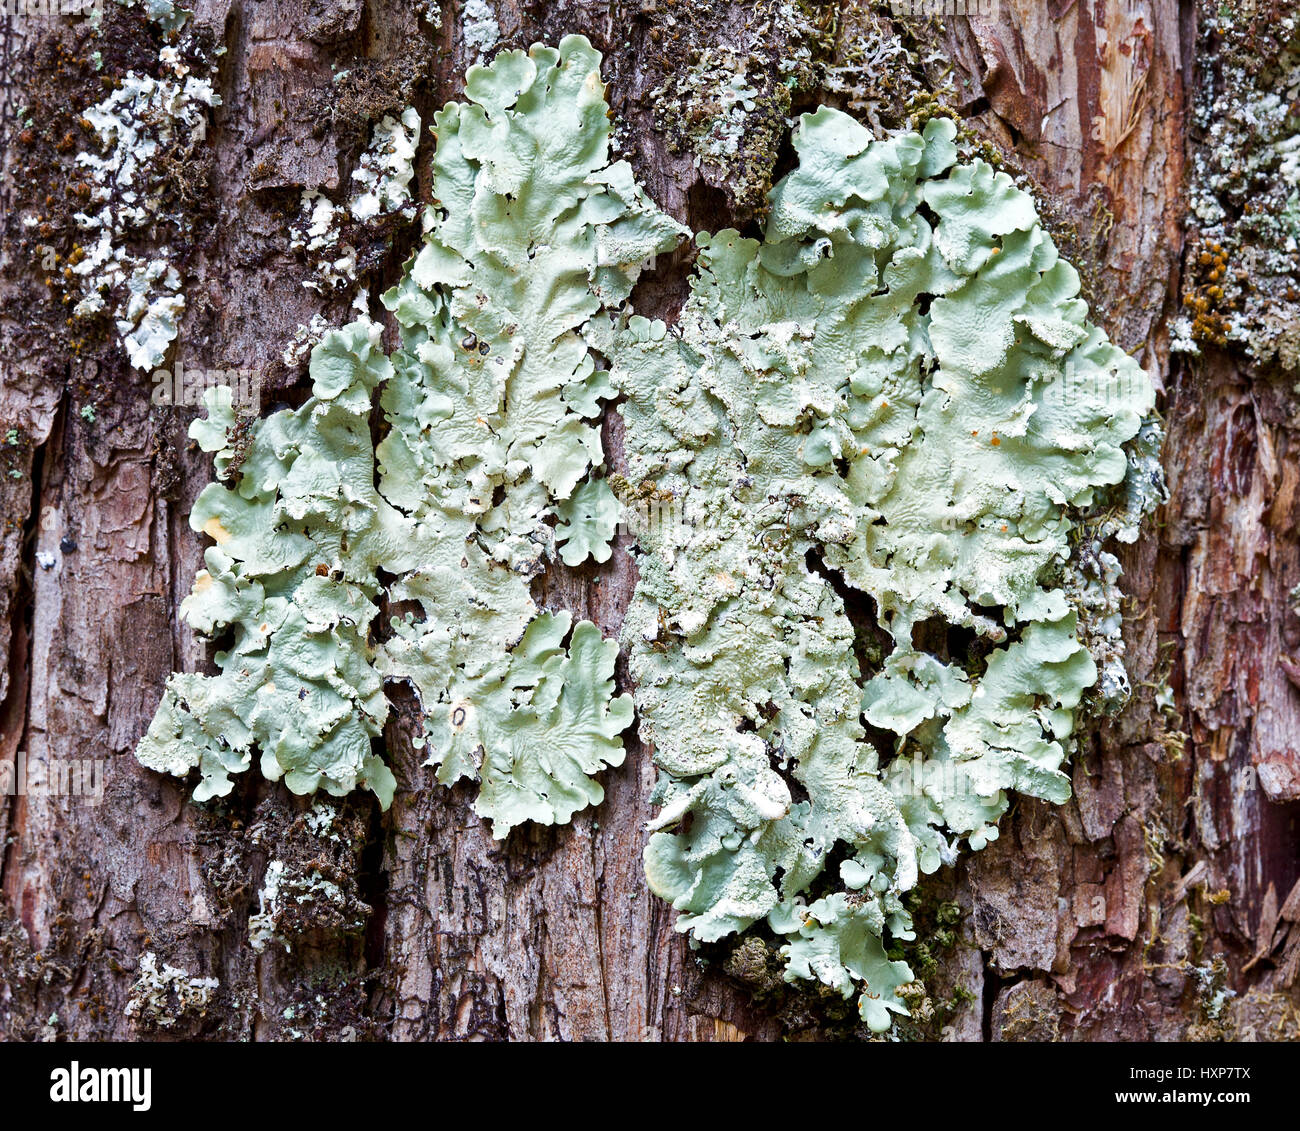 Foliose lichen belonging to Parmelia genus on coniferous bark Stock Photo